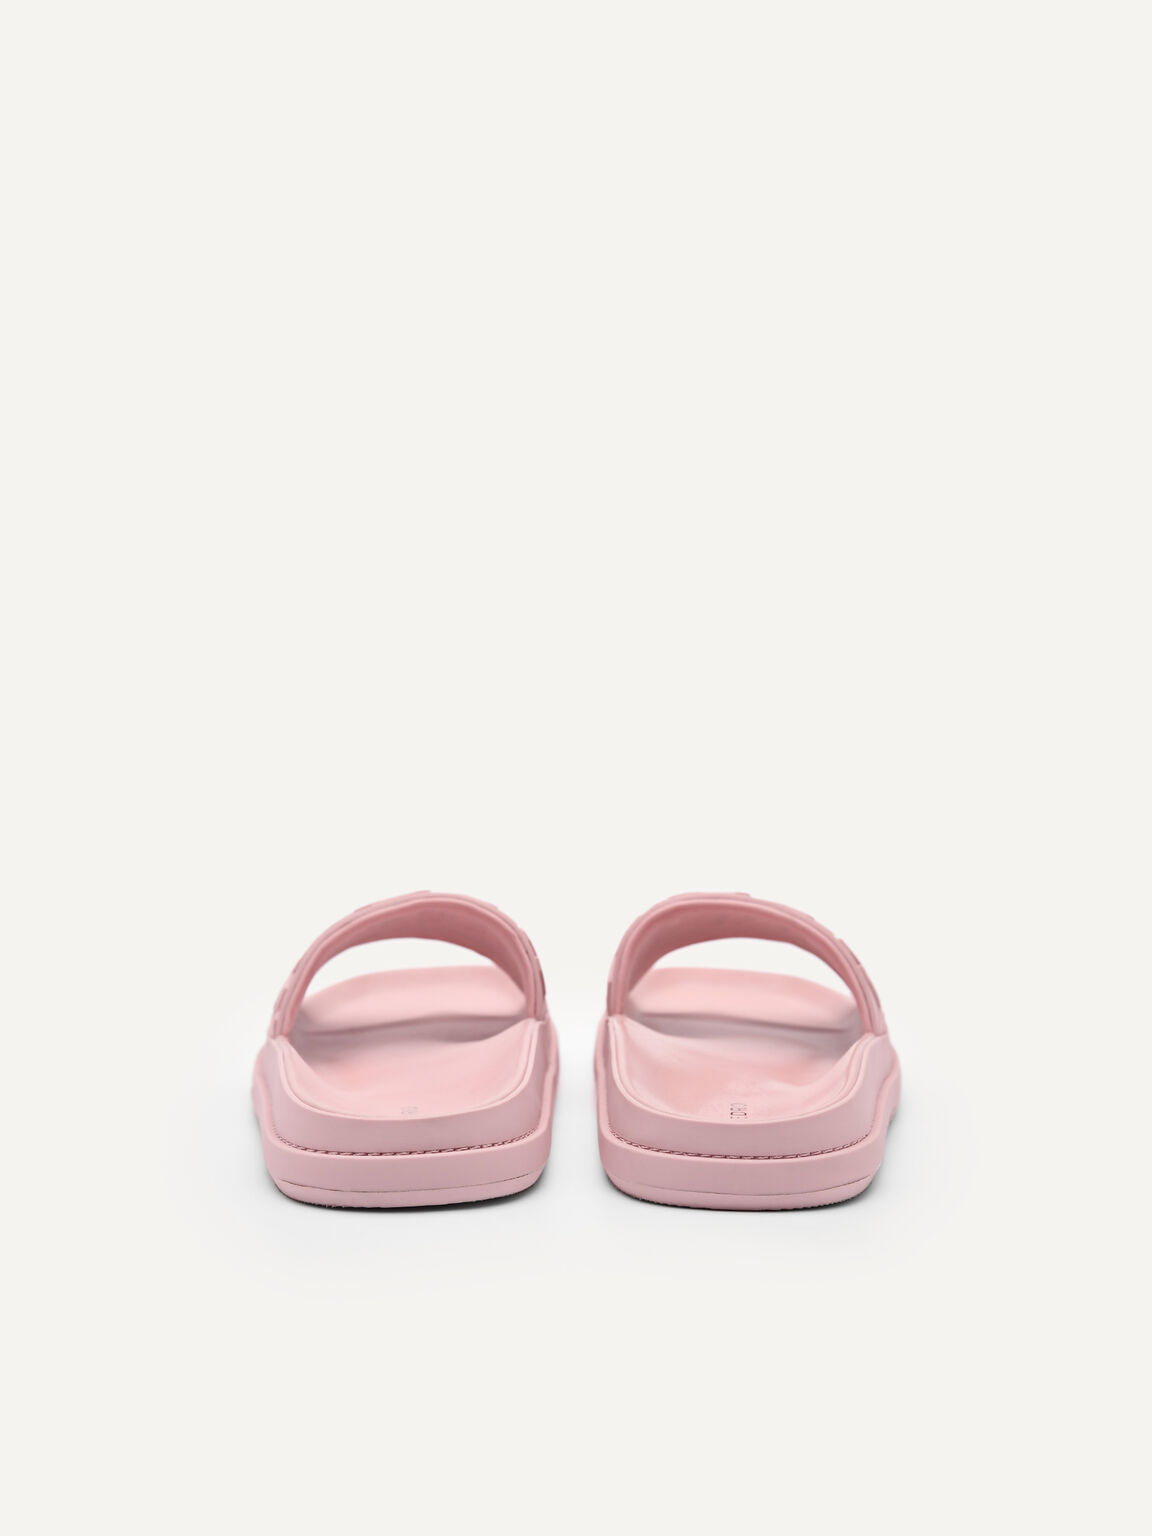 PEDRO標誌壓紋拖鞋, 粉色